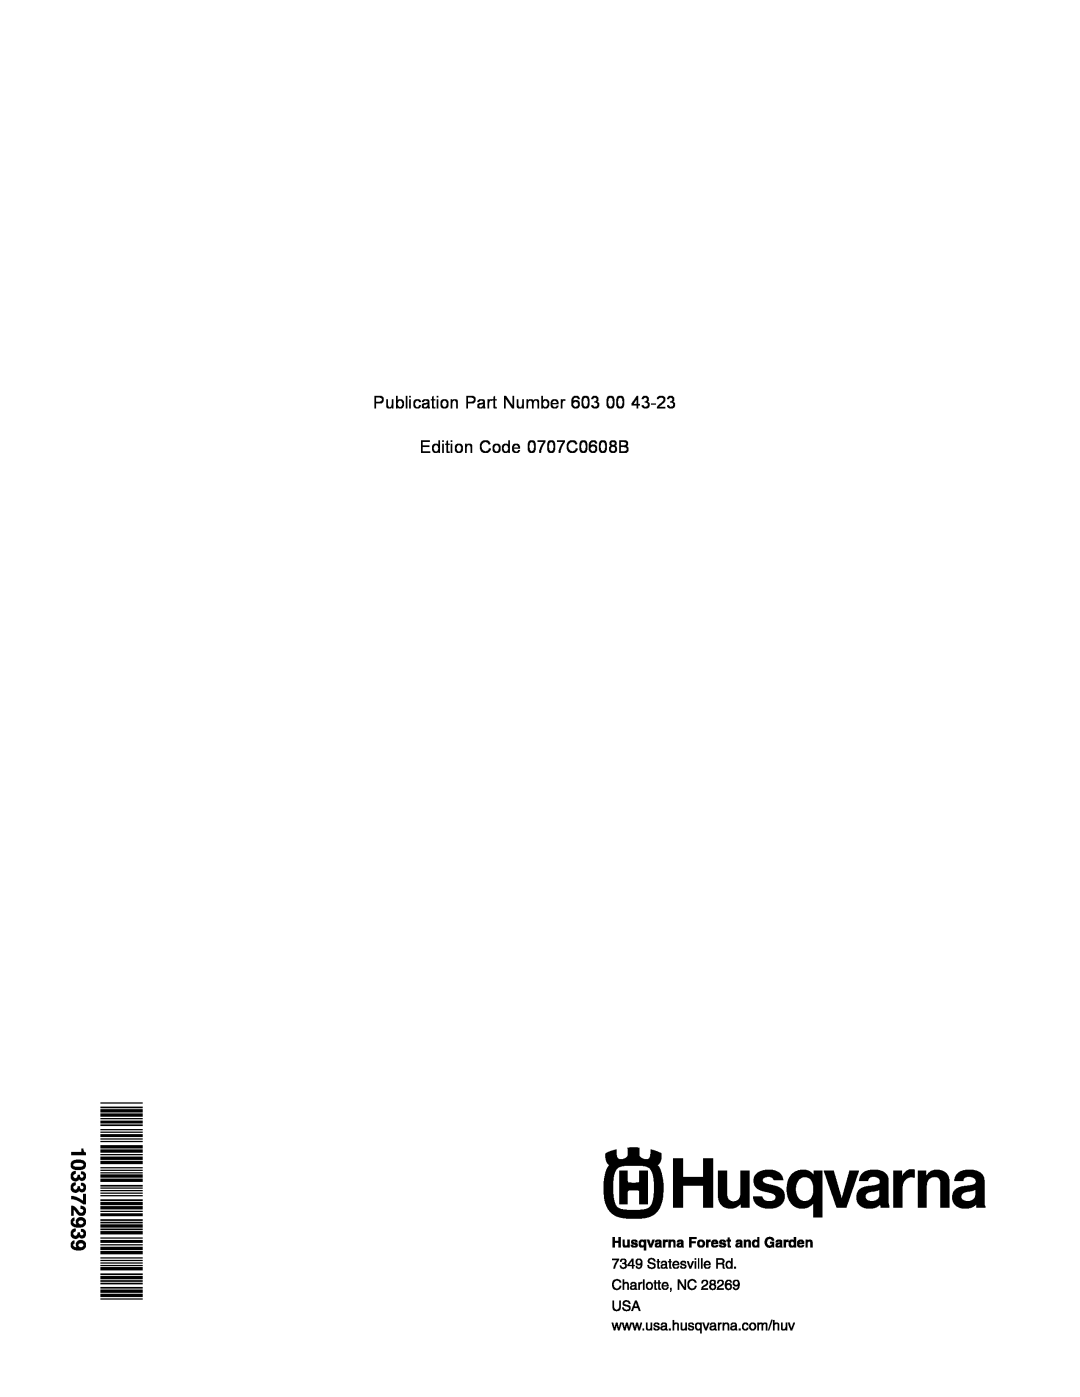 Husqvarna HUV 4213-GXP owner manual 103372939, Publication Part Number, Edition Code 0707C0608B 